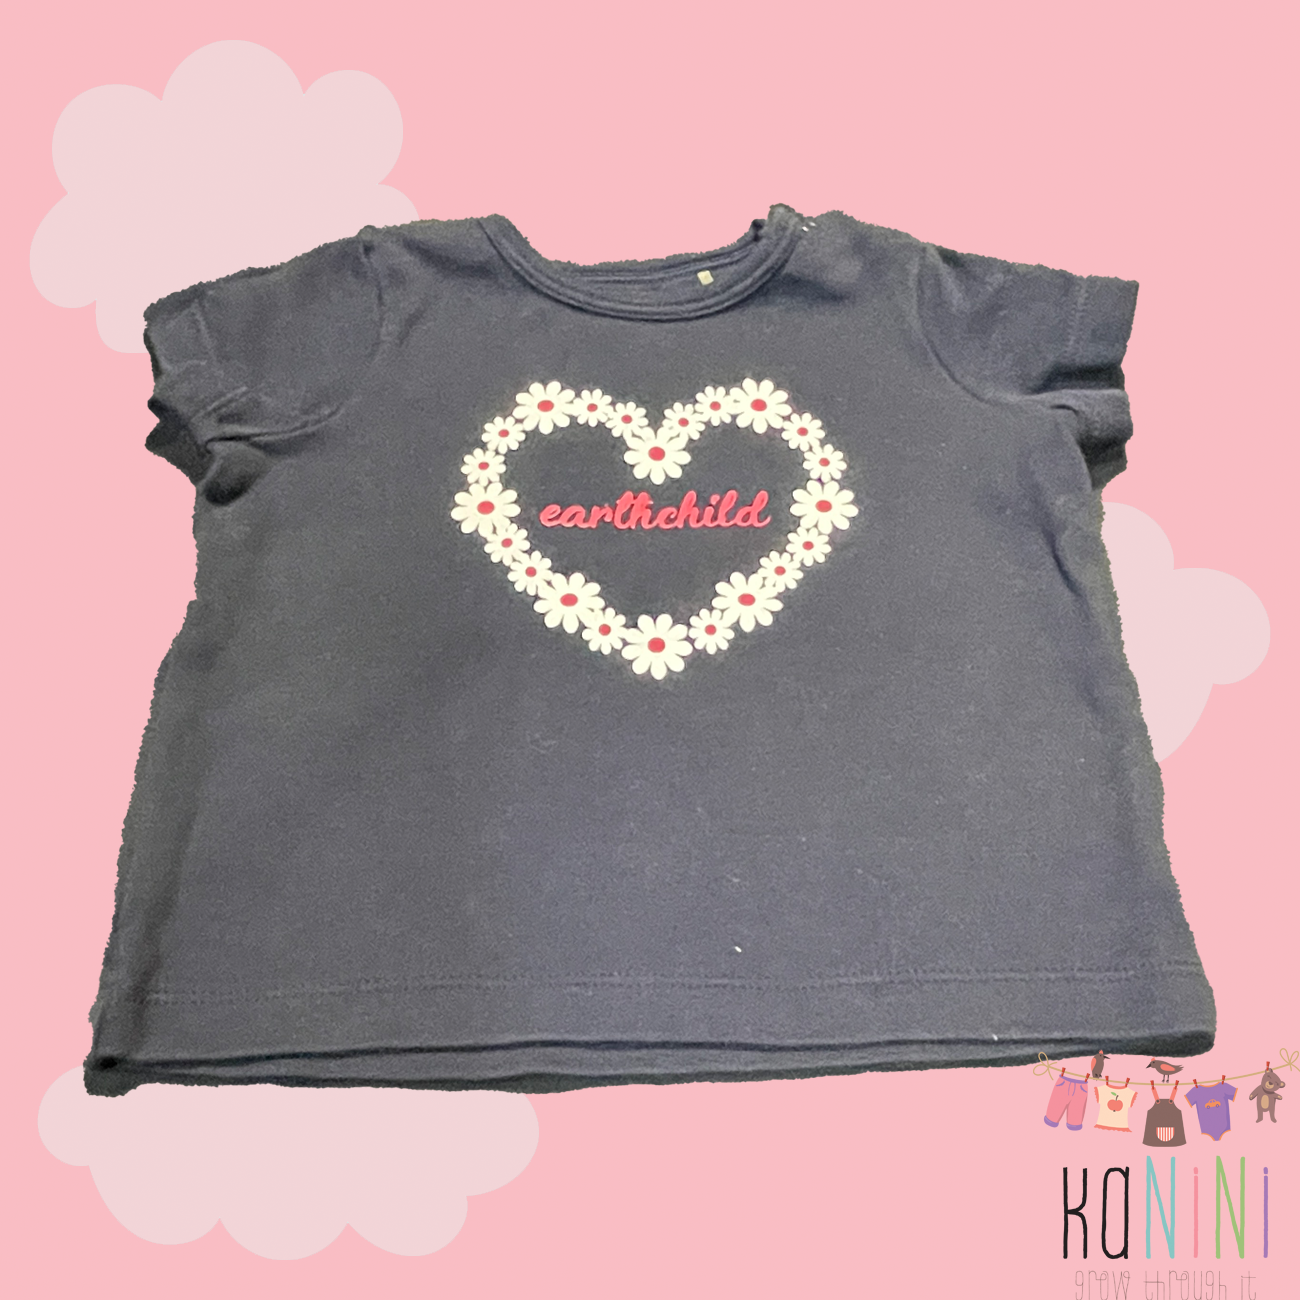 Featured image for “Earthchild 6 - 12 Months Girls Flower / Heart t-Shirt”